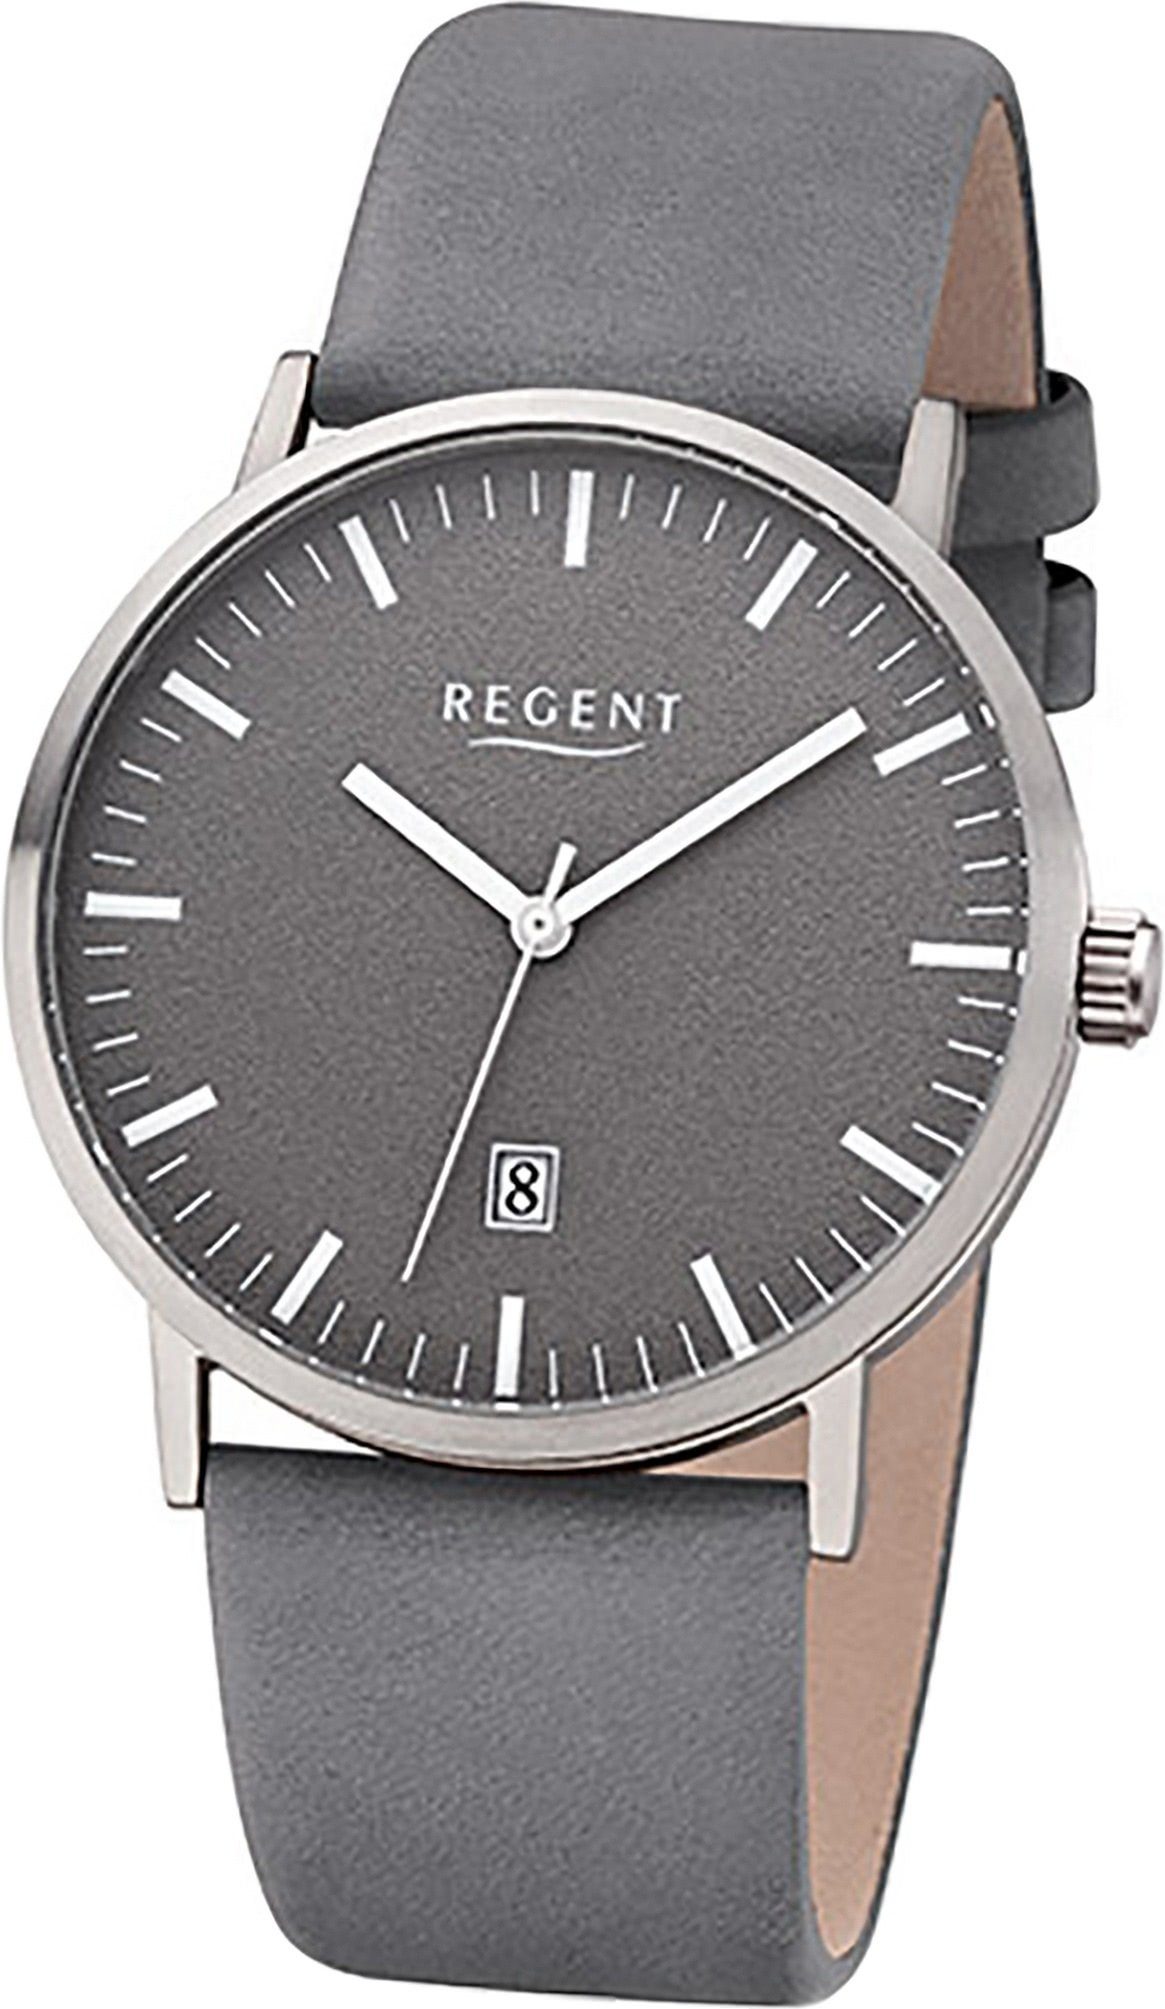 39mm) Leder Regent (ca. Gehäuse, Uhr Lederarmband Herrenuhr Regent F-1234 grau, mittel rundes Herren Quarzuhr Analoge,